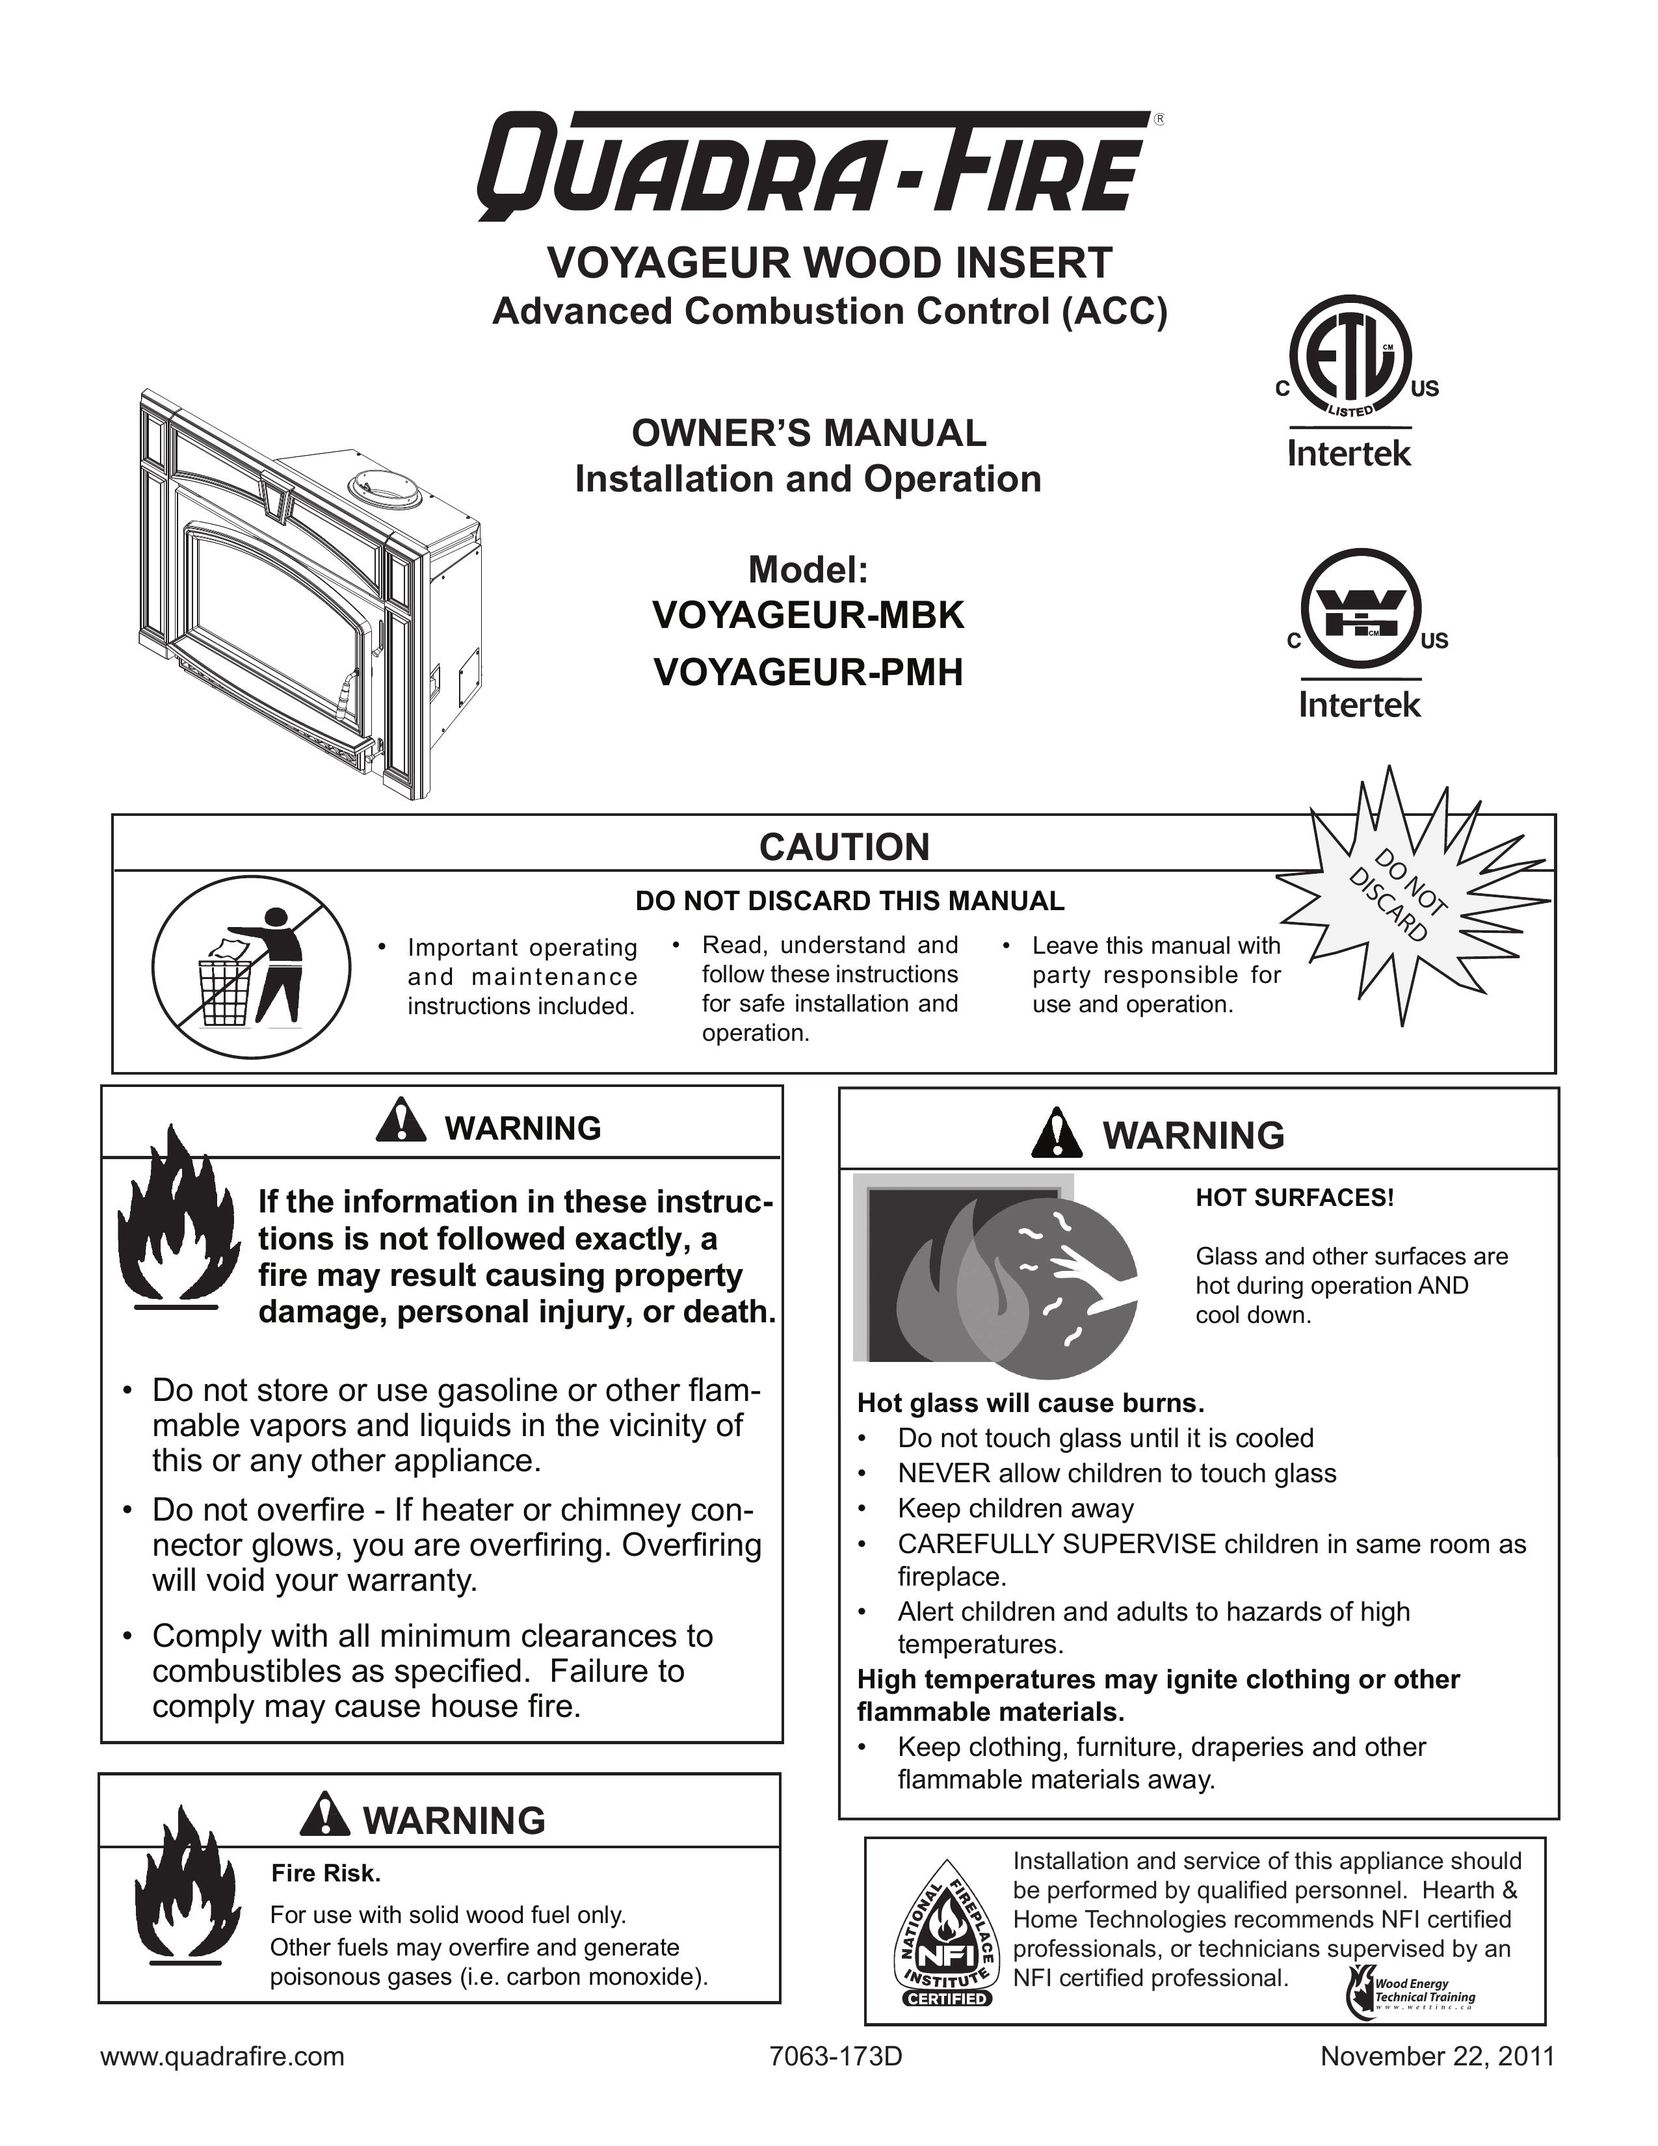 Quadra-Fire VOYAGEUR-MBK Indoor Fireplace User Manual